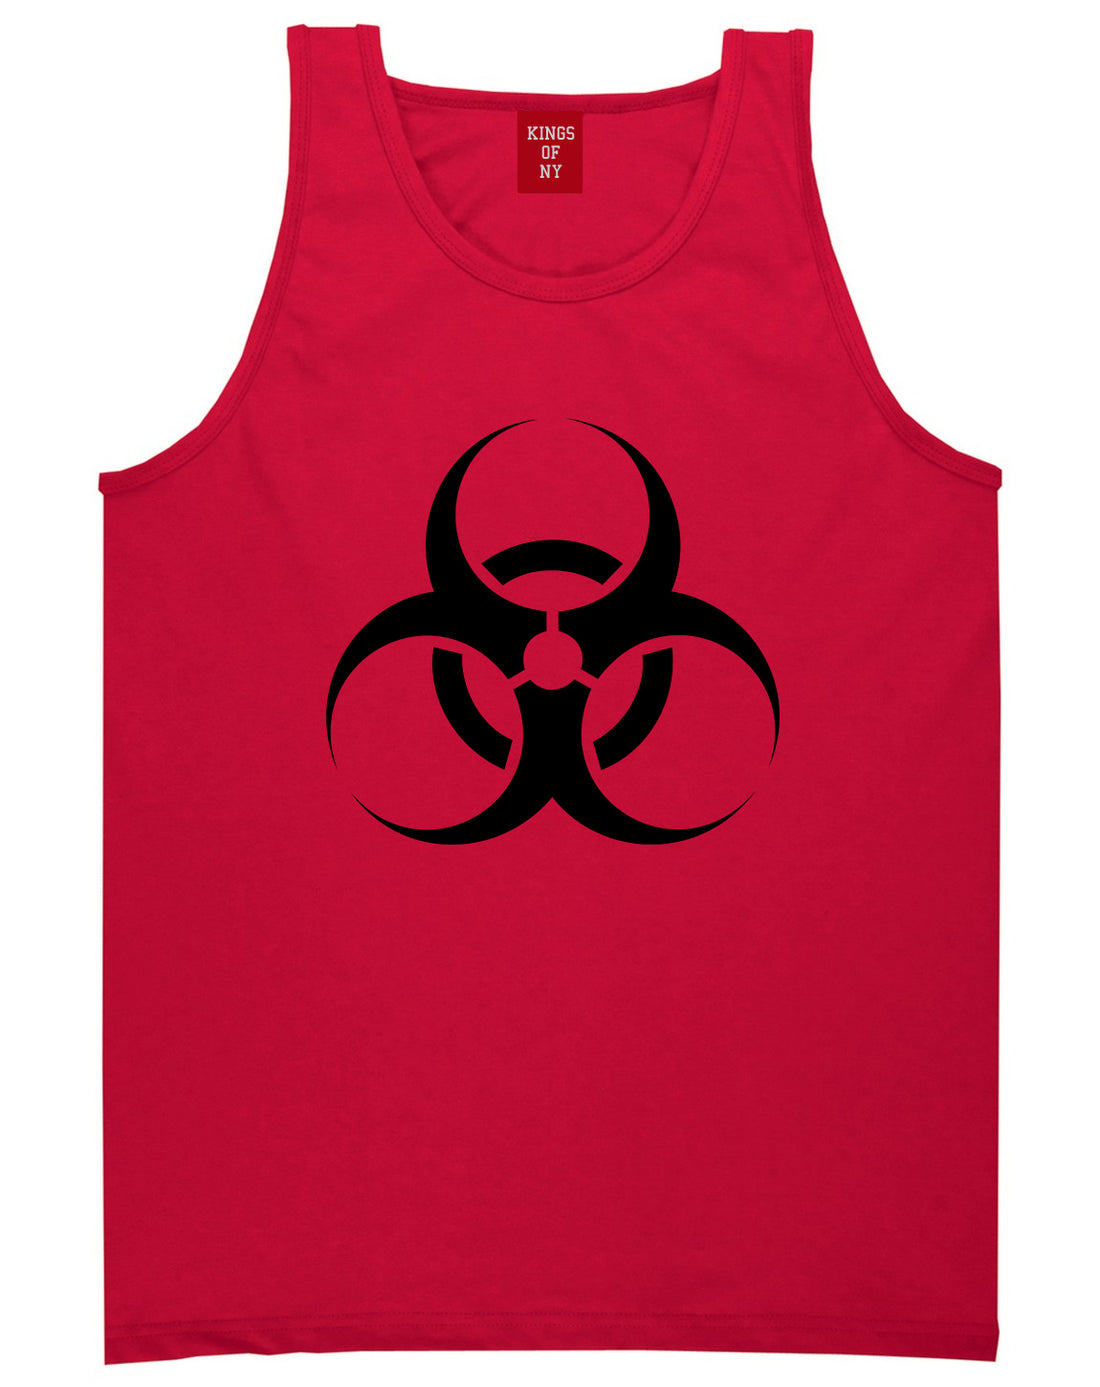 Biohazard Symbol Red Tank Top Shirt by Kings Of NY